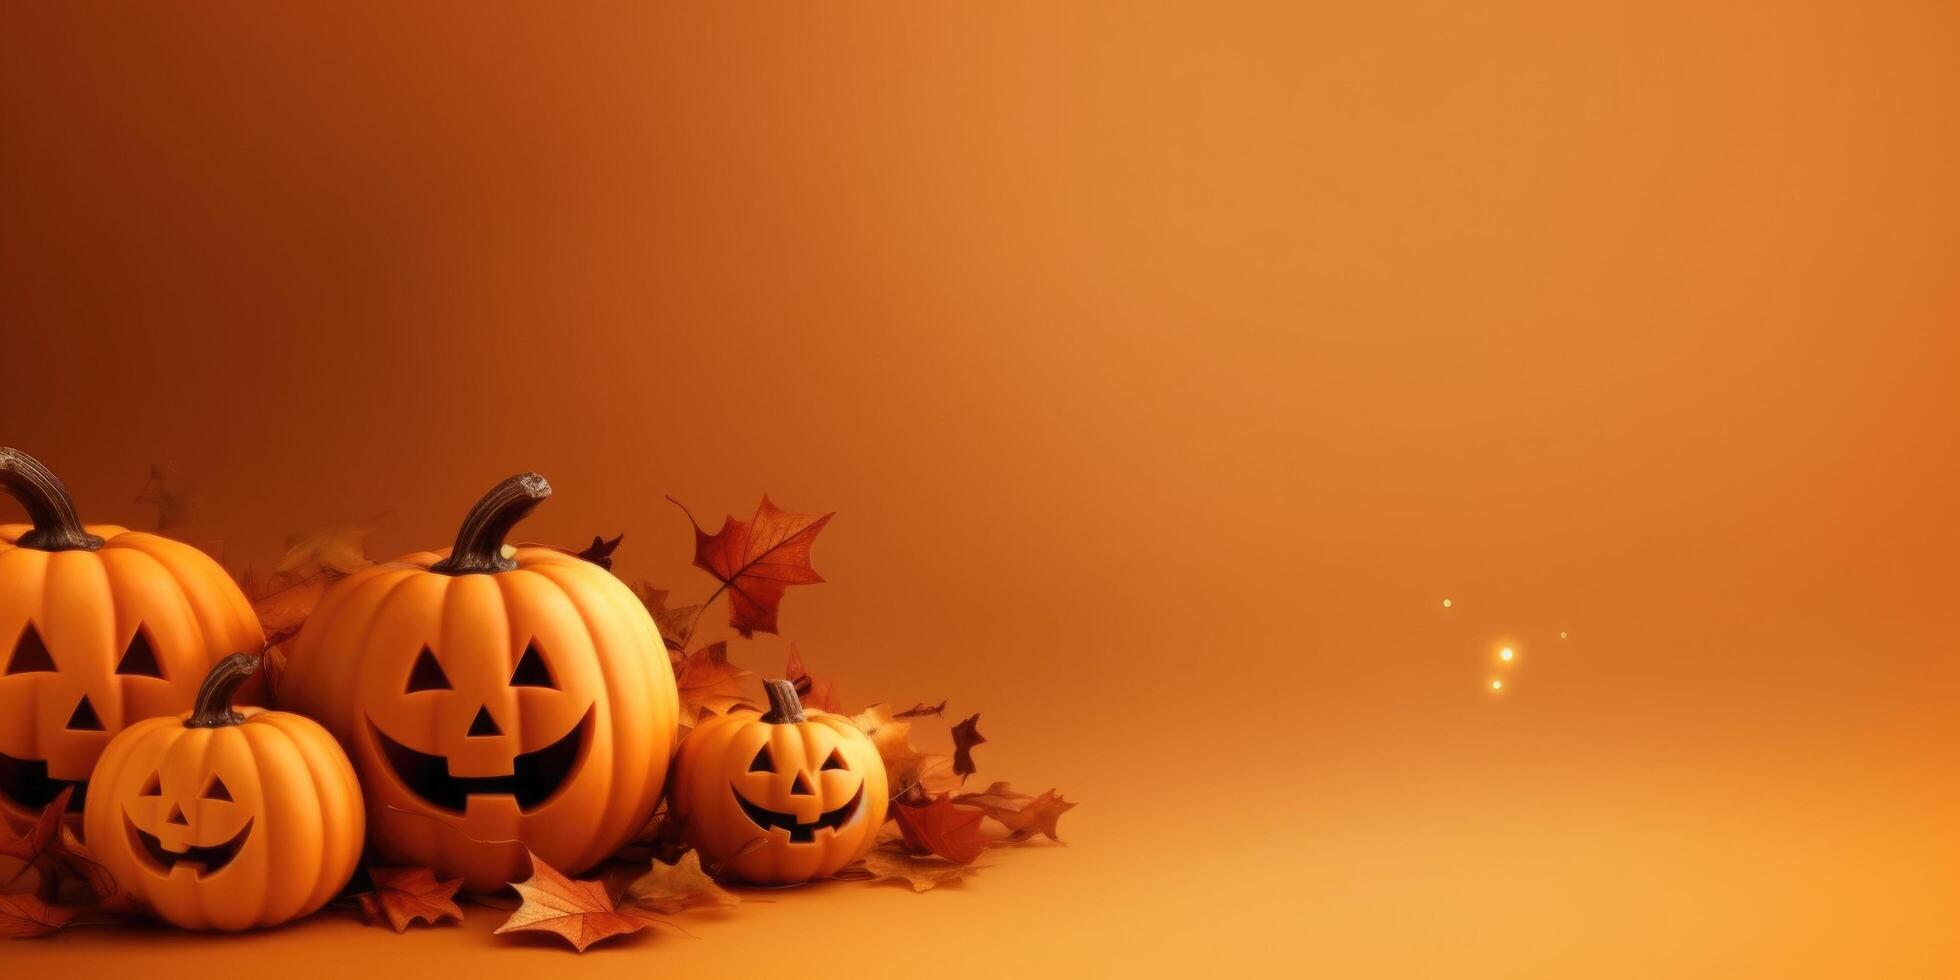 Orange Spooky Halloween background. Illustration photo